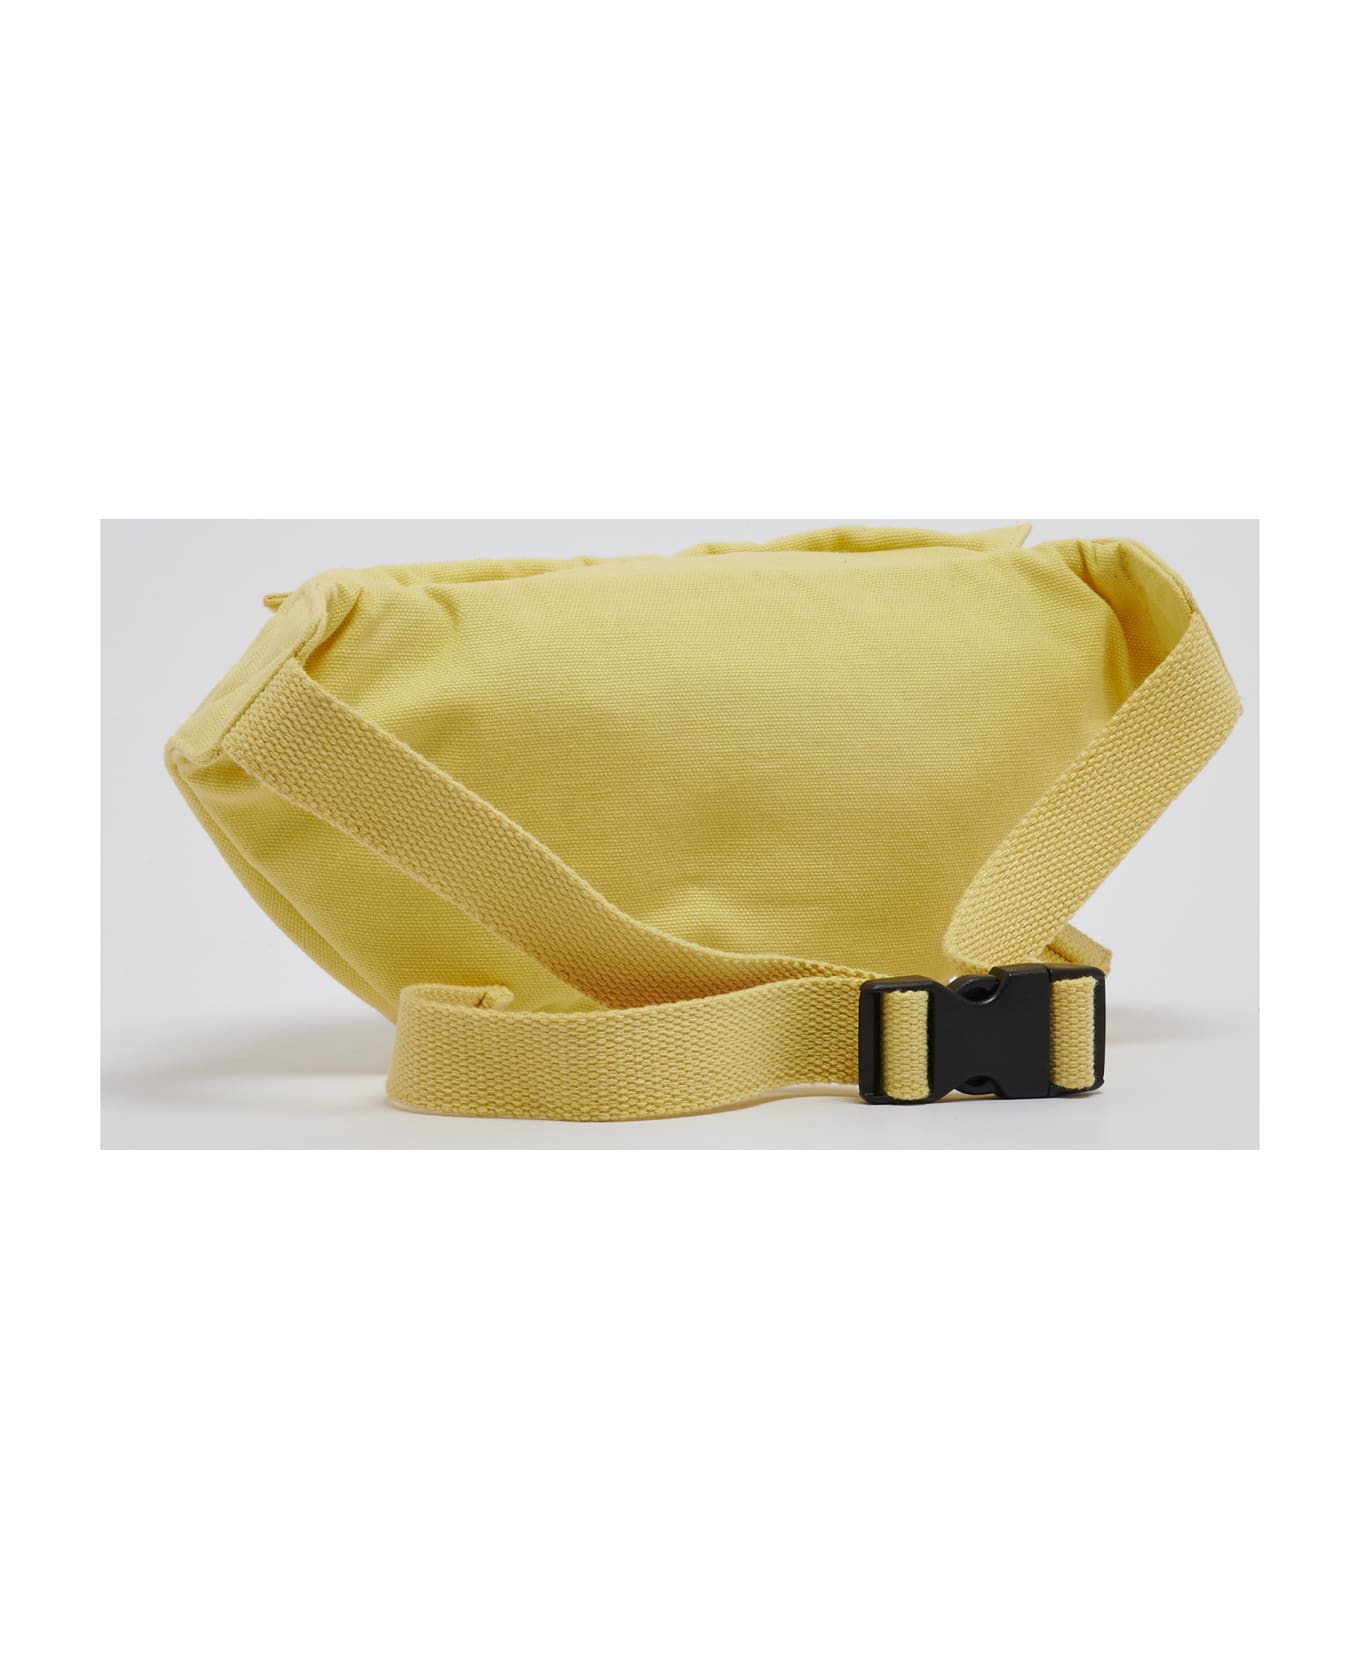 Polo Ralph Lauren Waist Bag-medium Shoulder Bag - GIALLO